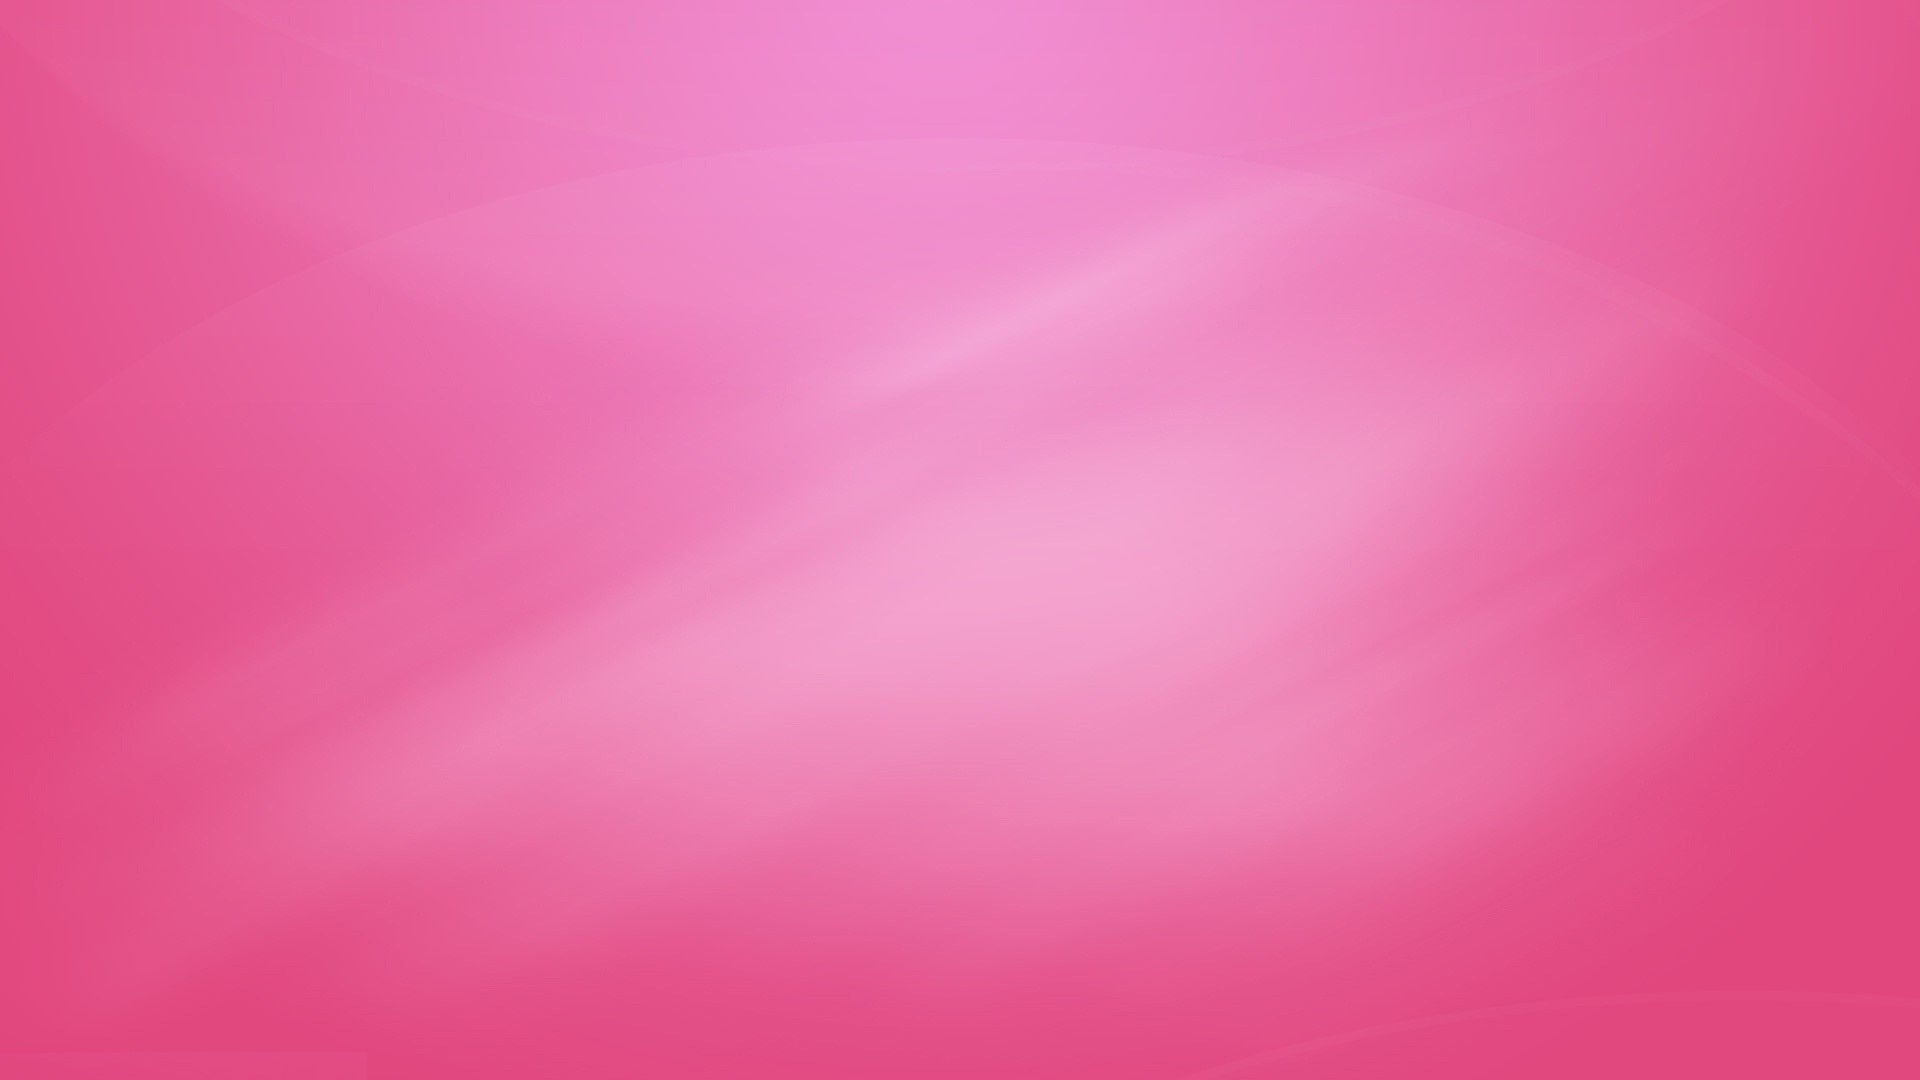 Pink Wallpaper For Desktop 1920x1080